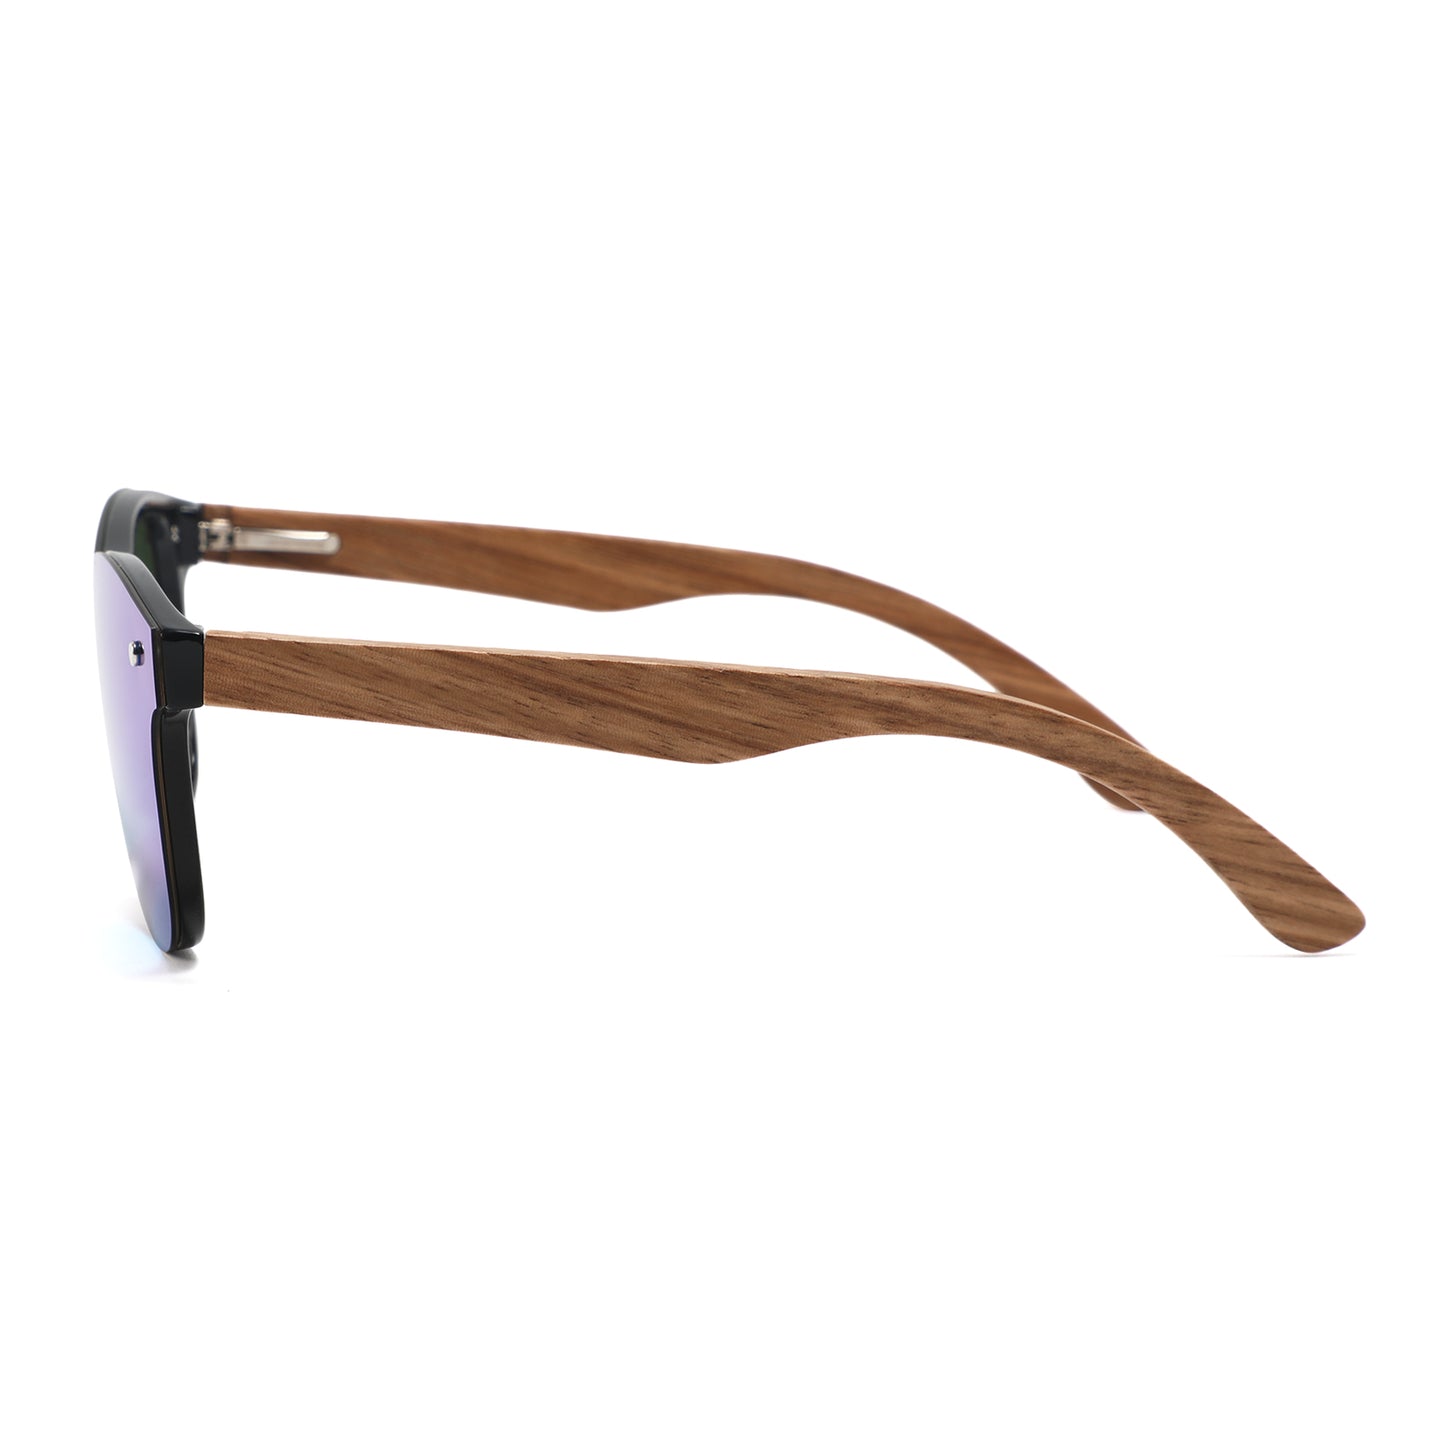 MATRIX PINK Sunglasses Polarised Lens and Wood Arms